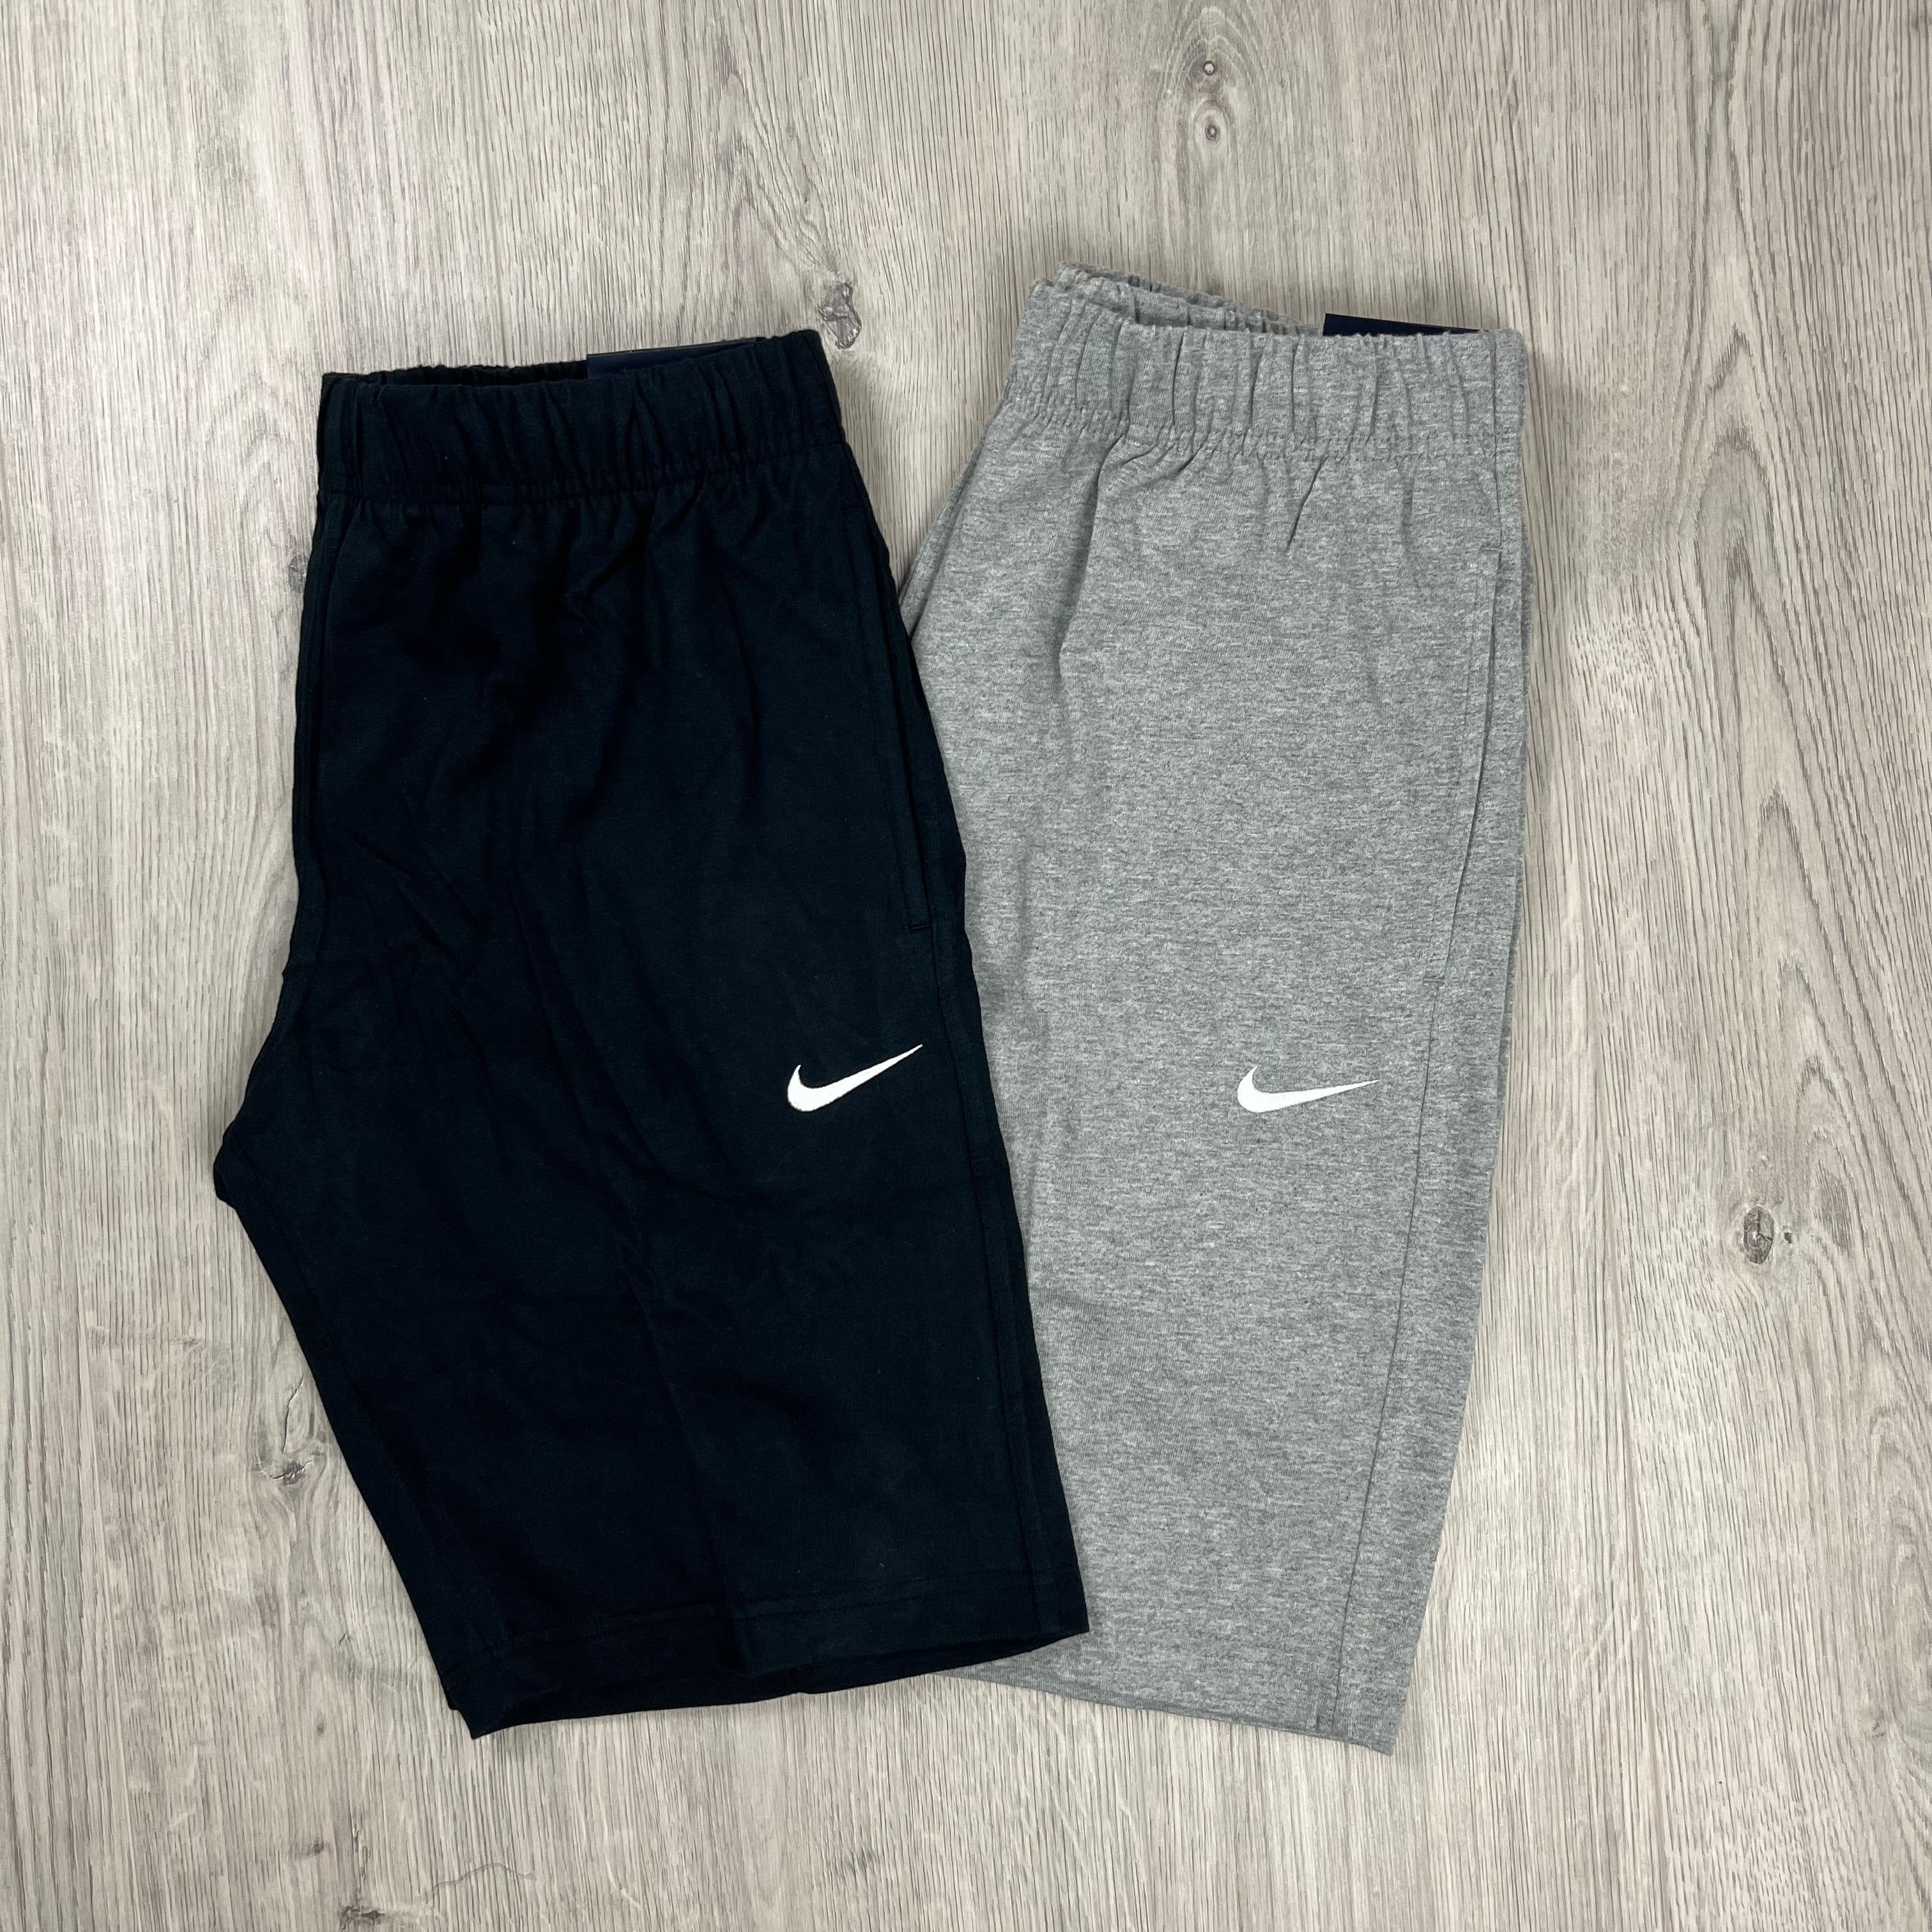 Nike Jersey Shorts Pack